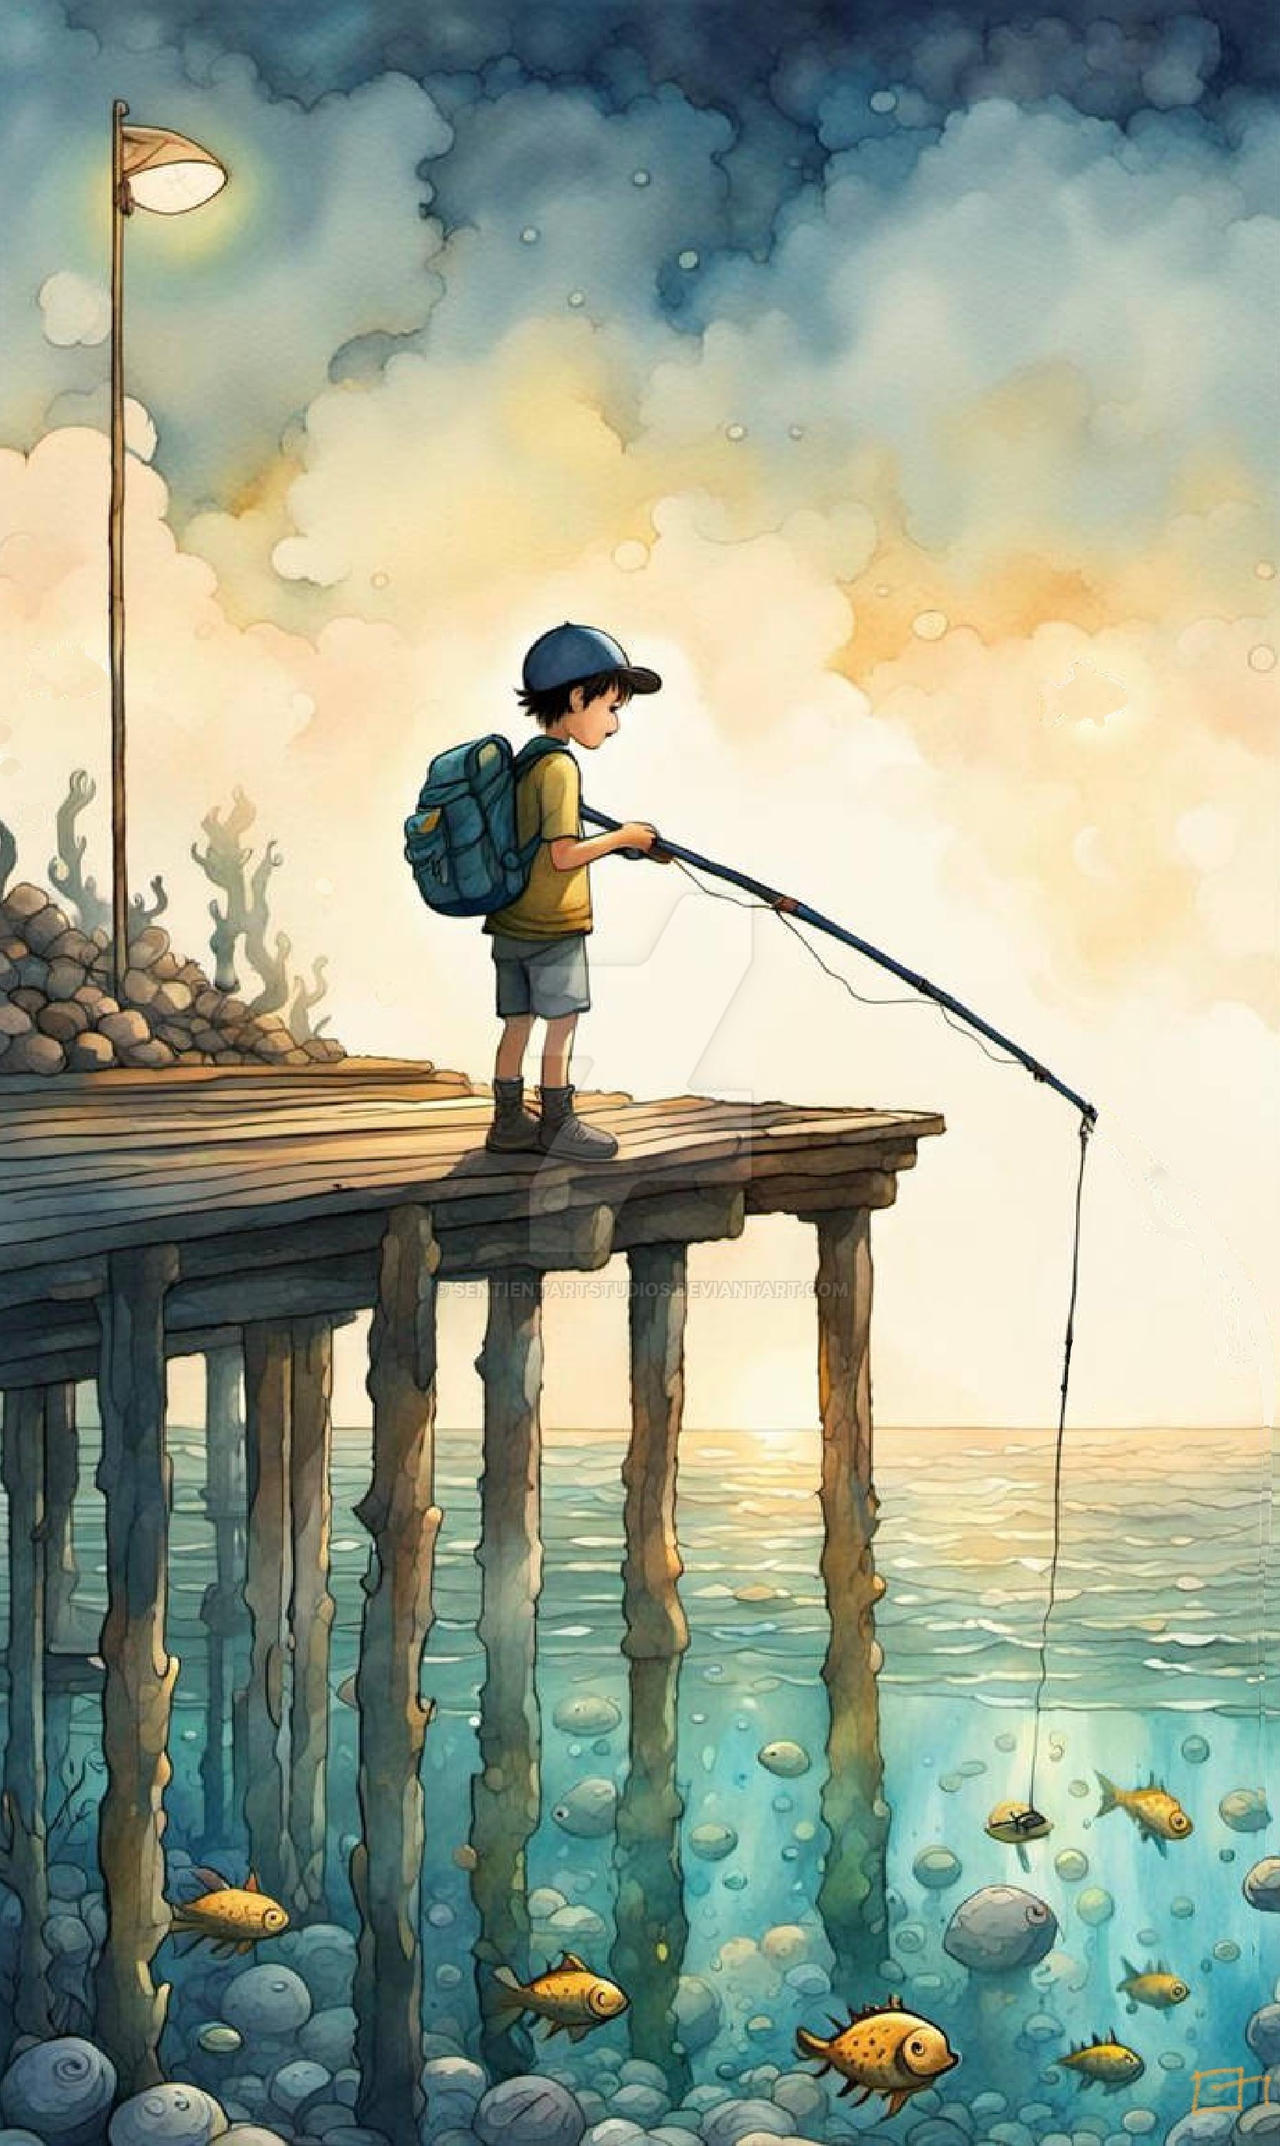 Boy Fishing at the Secret Pond by SentientArtStudios on DeviantArt